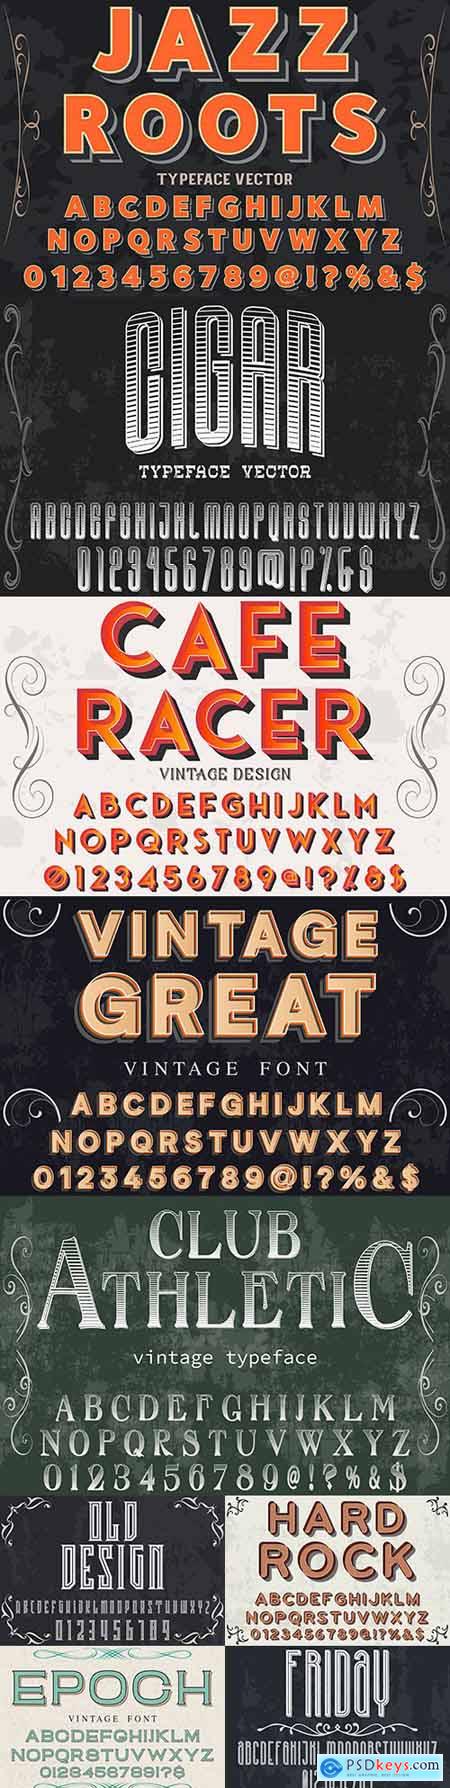 Vintage font effect text with alphabet illustration design